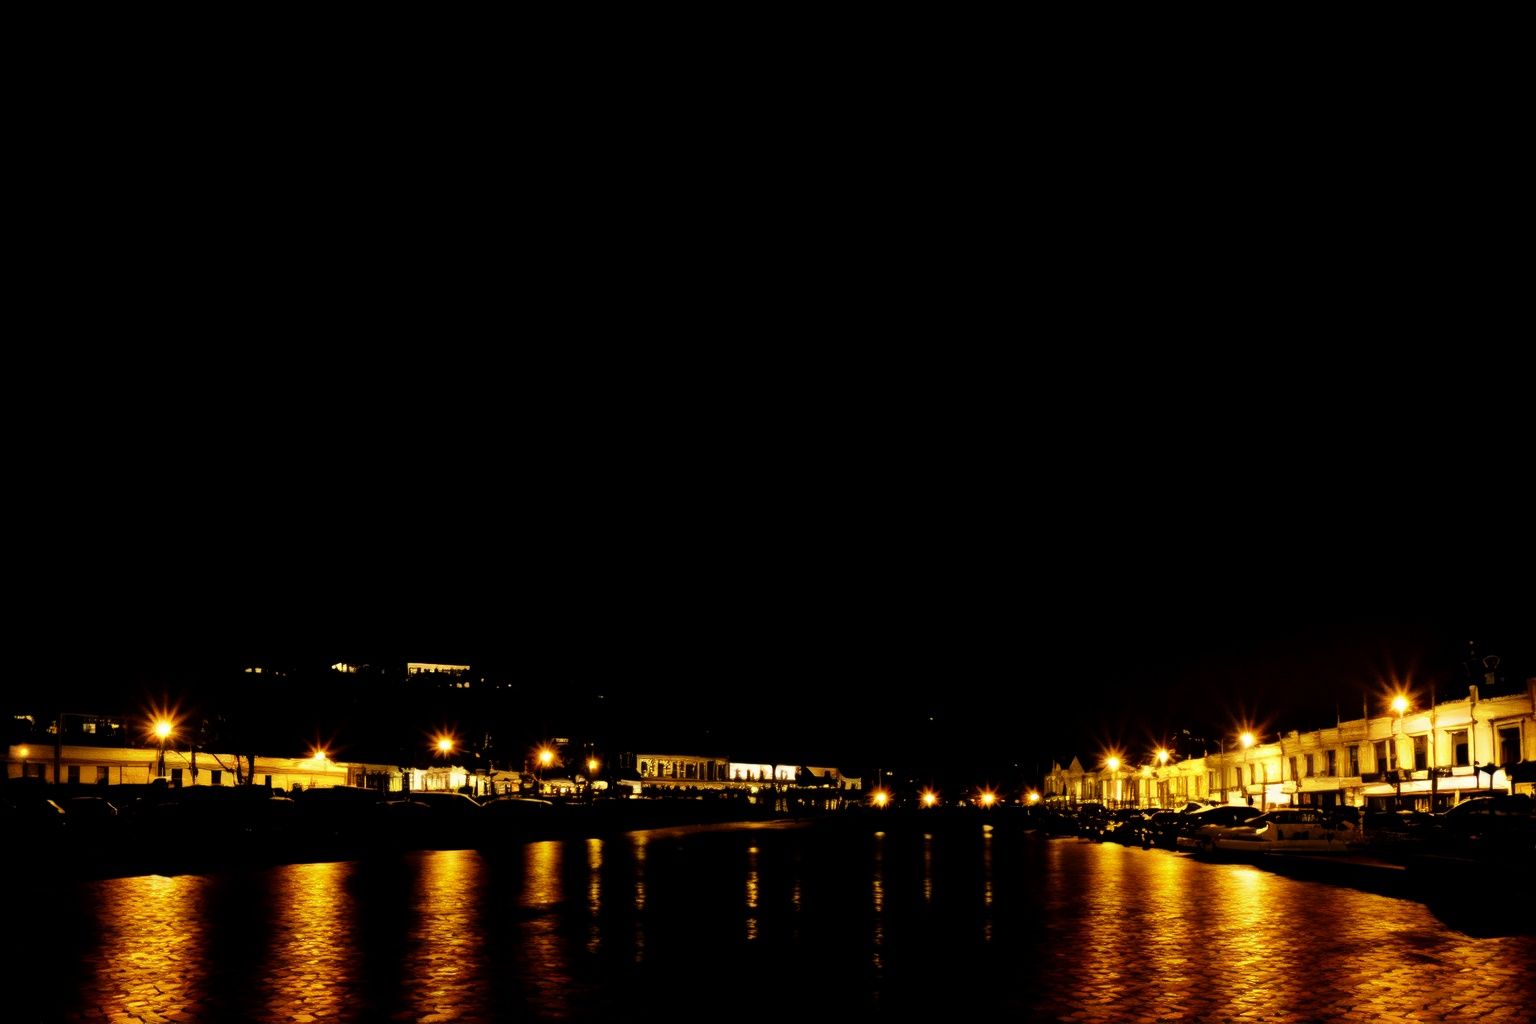 Dunedin city at night time, retro photography